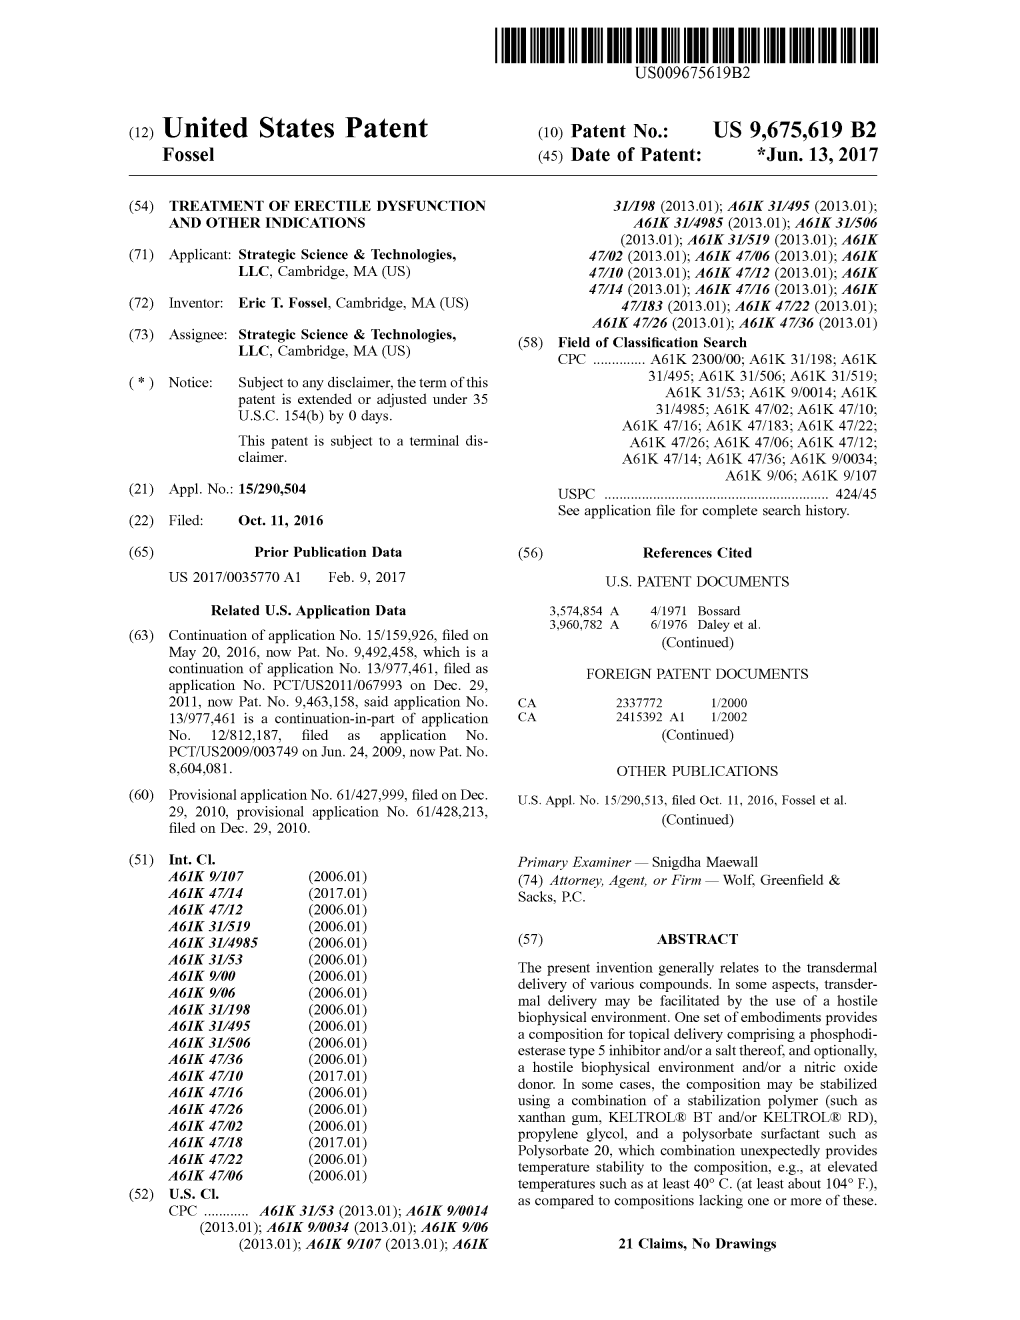 (12) United States Patent (10) Patent No.: US 9,675,619 B2 Fossel (45) Date of Patent: *Jun